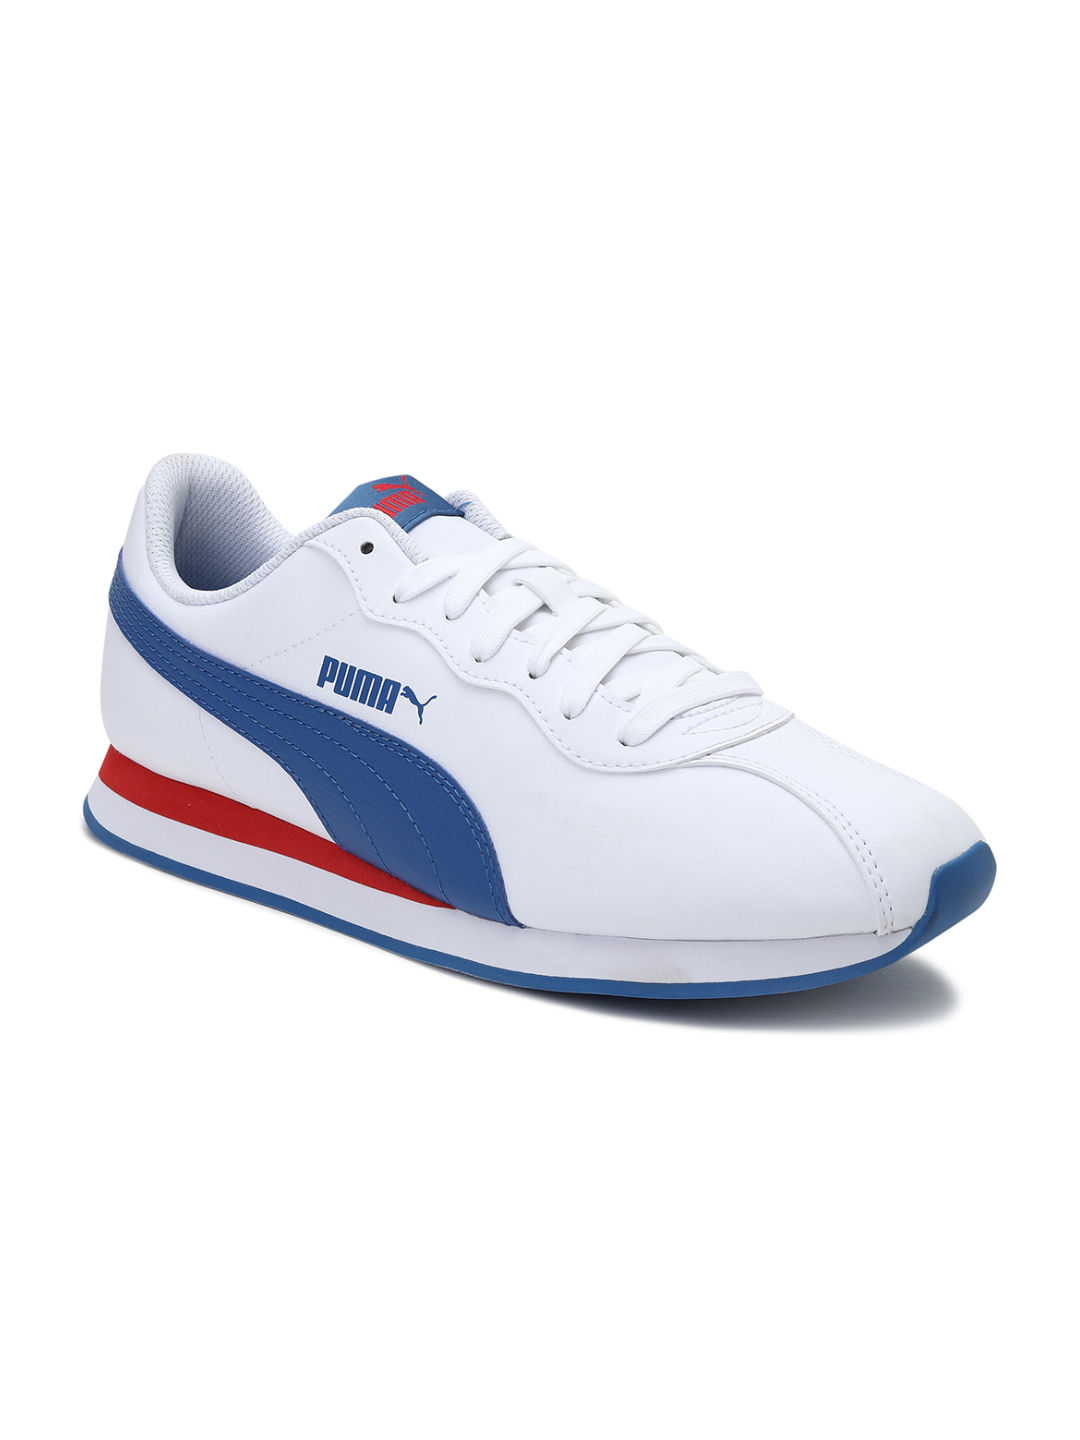 Buy Puma Puma Turin Ii Sneakers - 36696219 Online